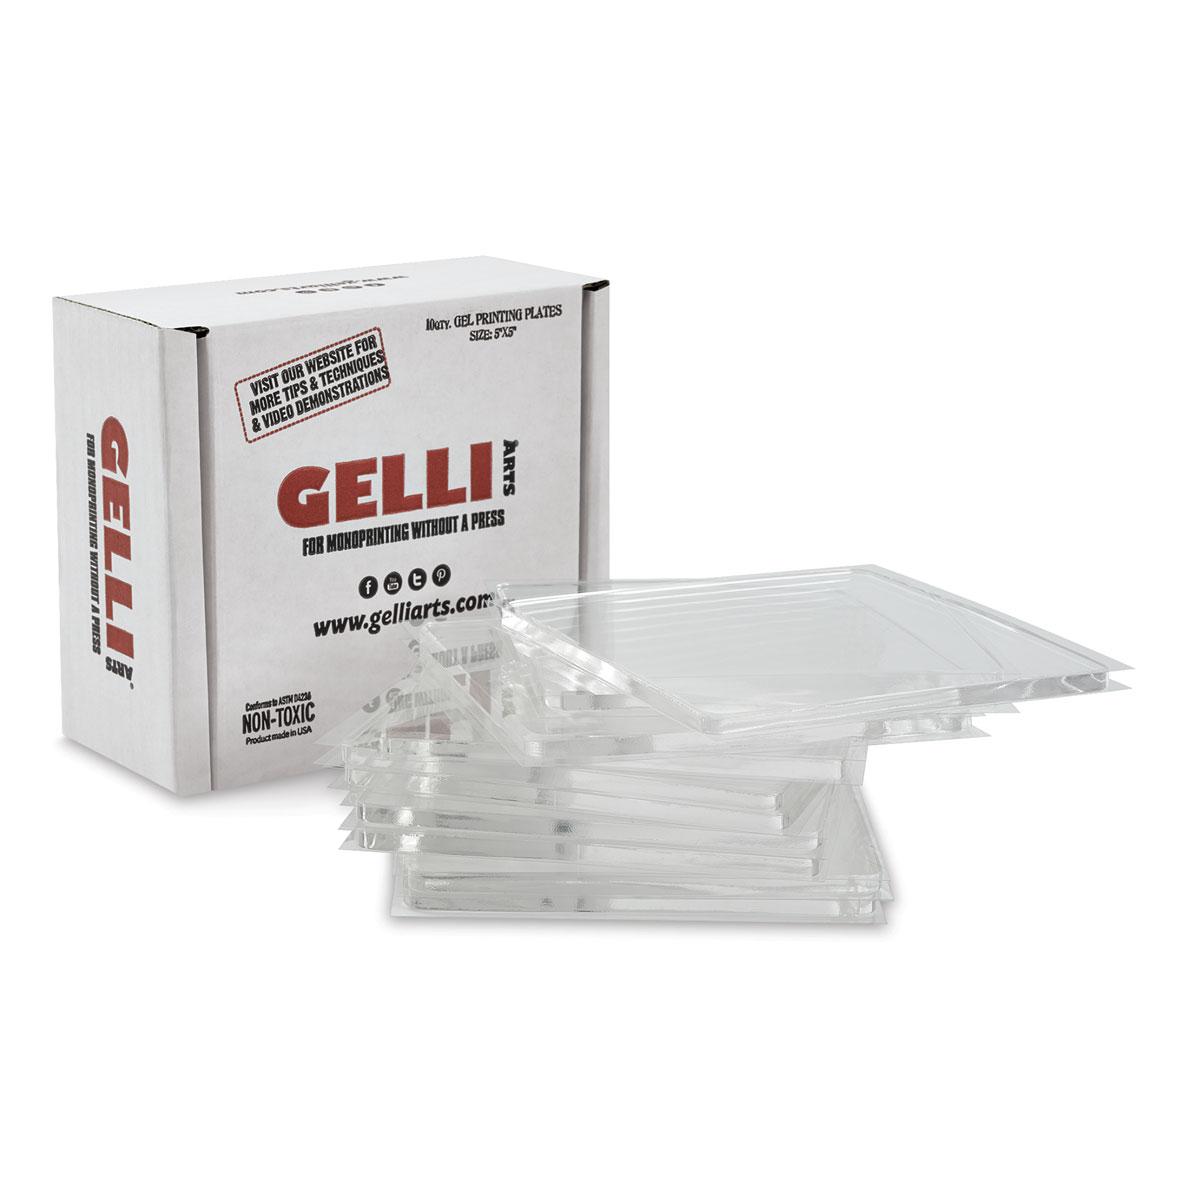 Gelli Plate - 8x10 Inch - Seawhite of Brighton Ltd